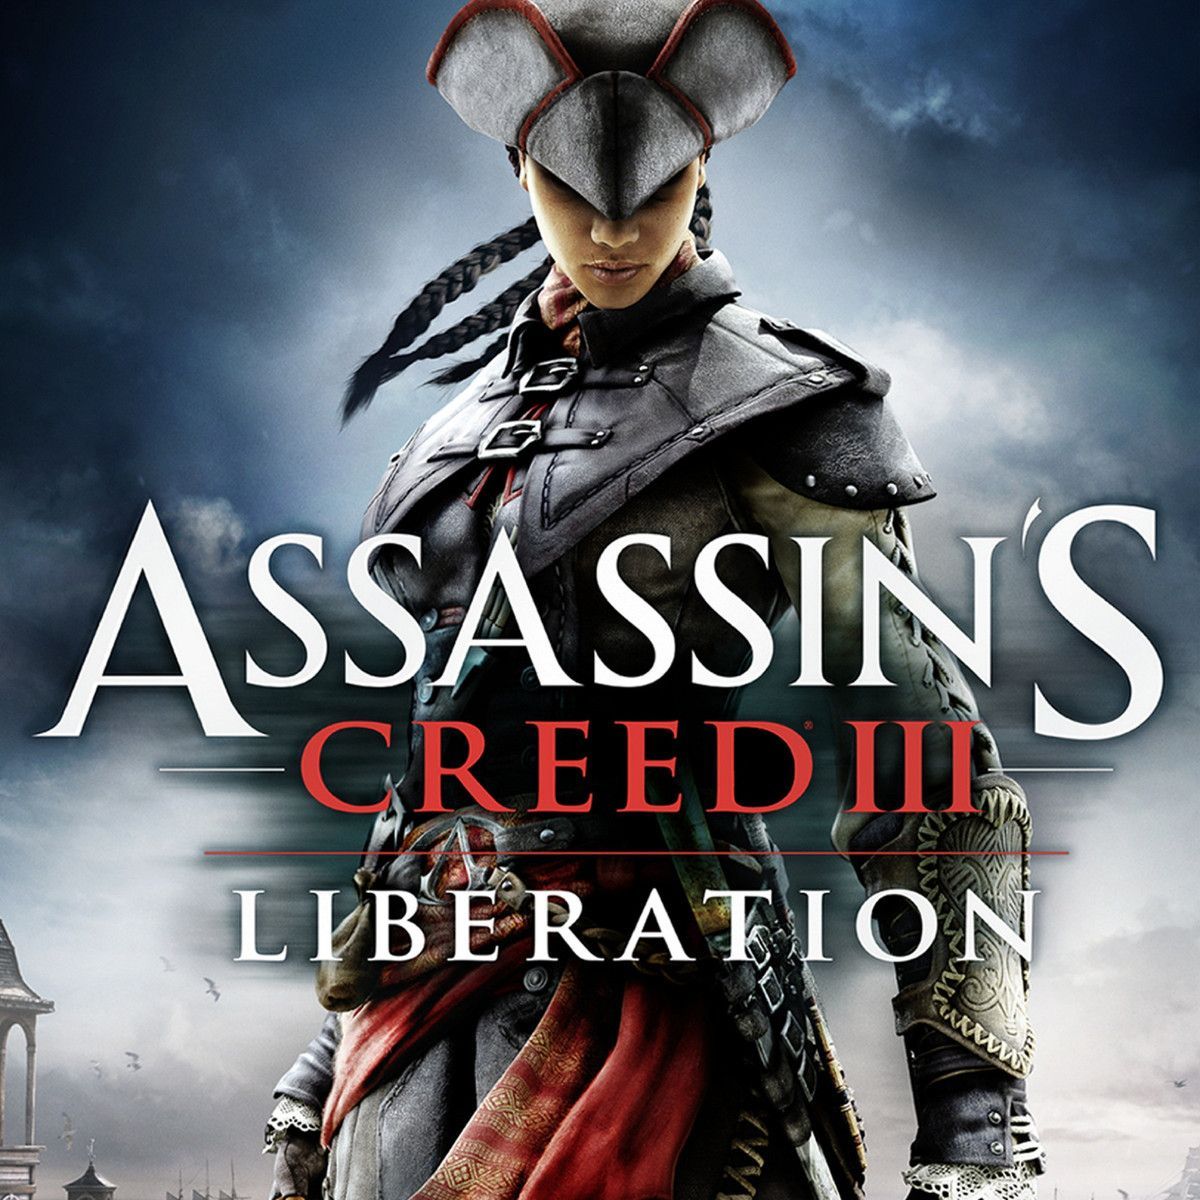 Assassin's Creed III: Liberation #23